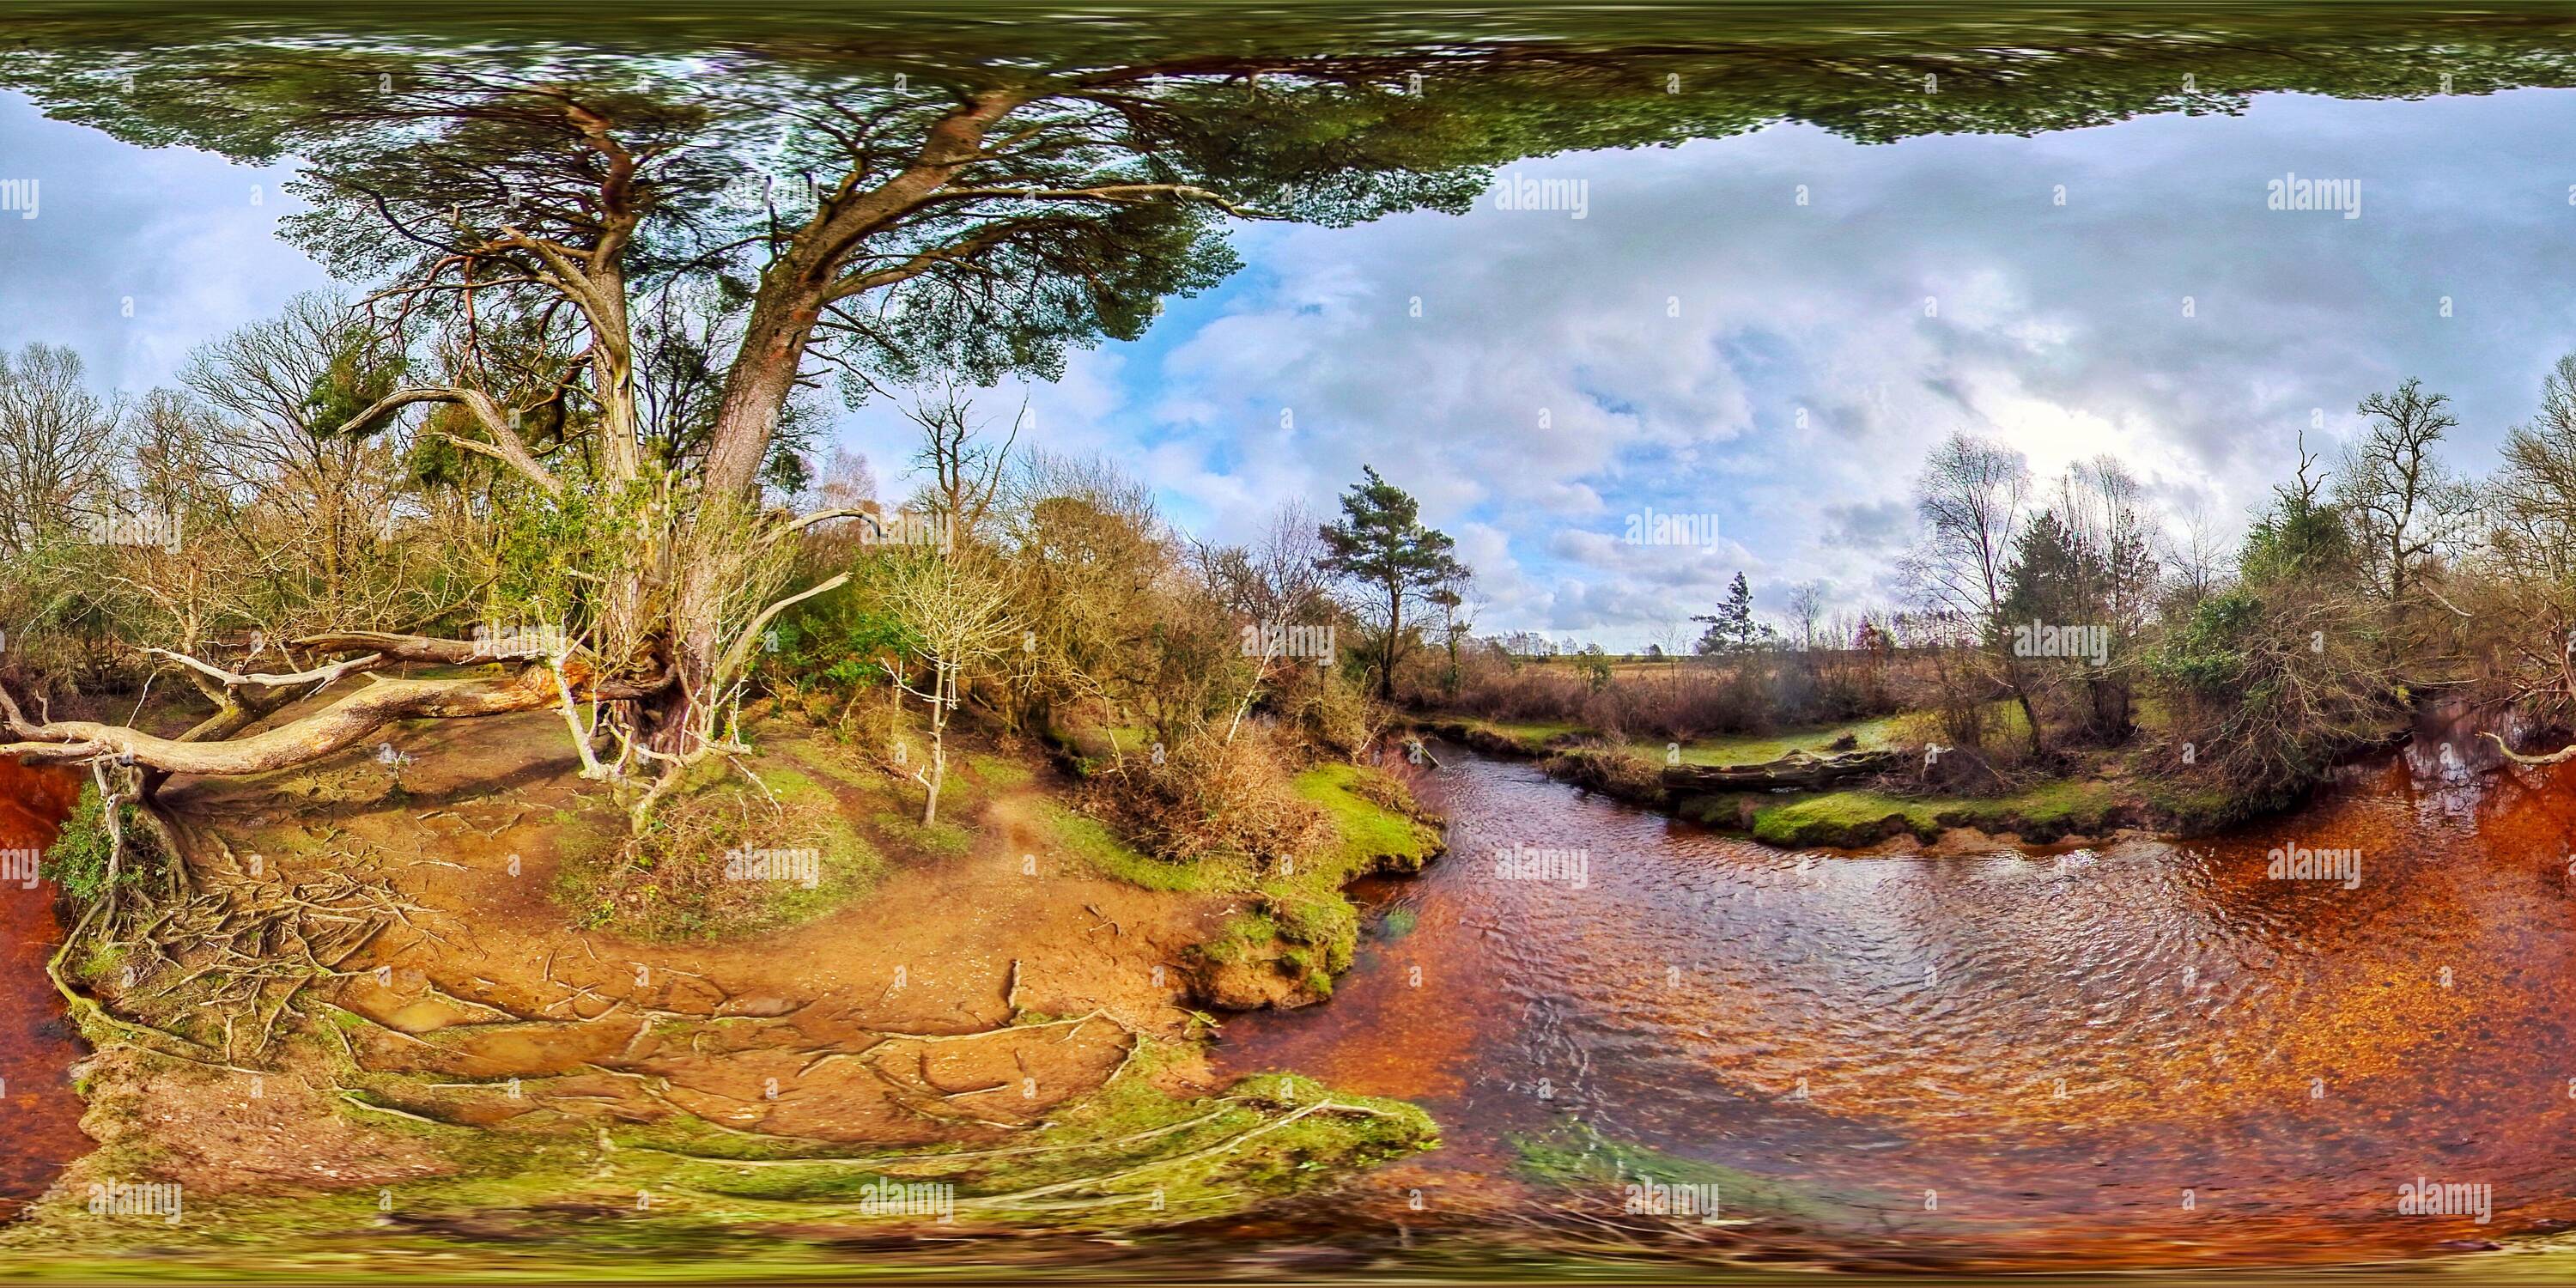 Vista panorámica en 360 grados de Pino junto a New Forest Stream (360VR)